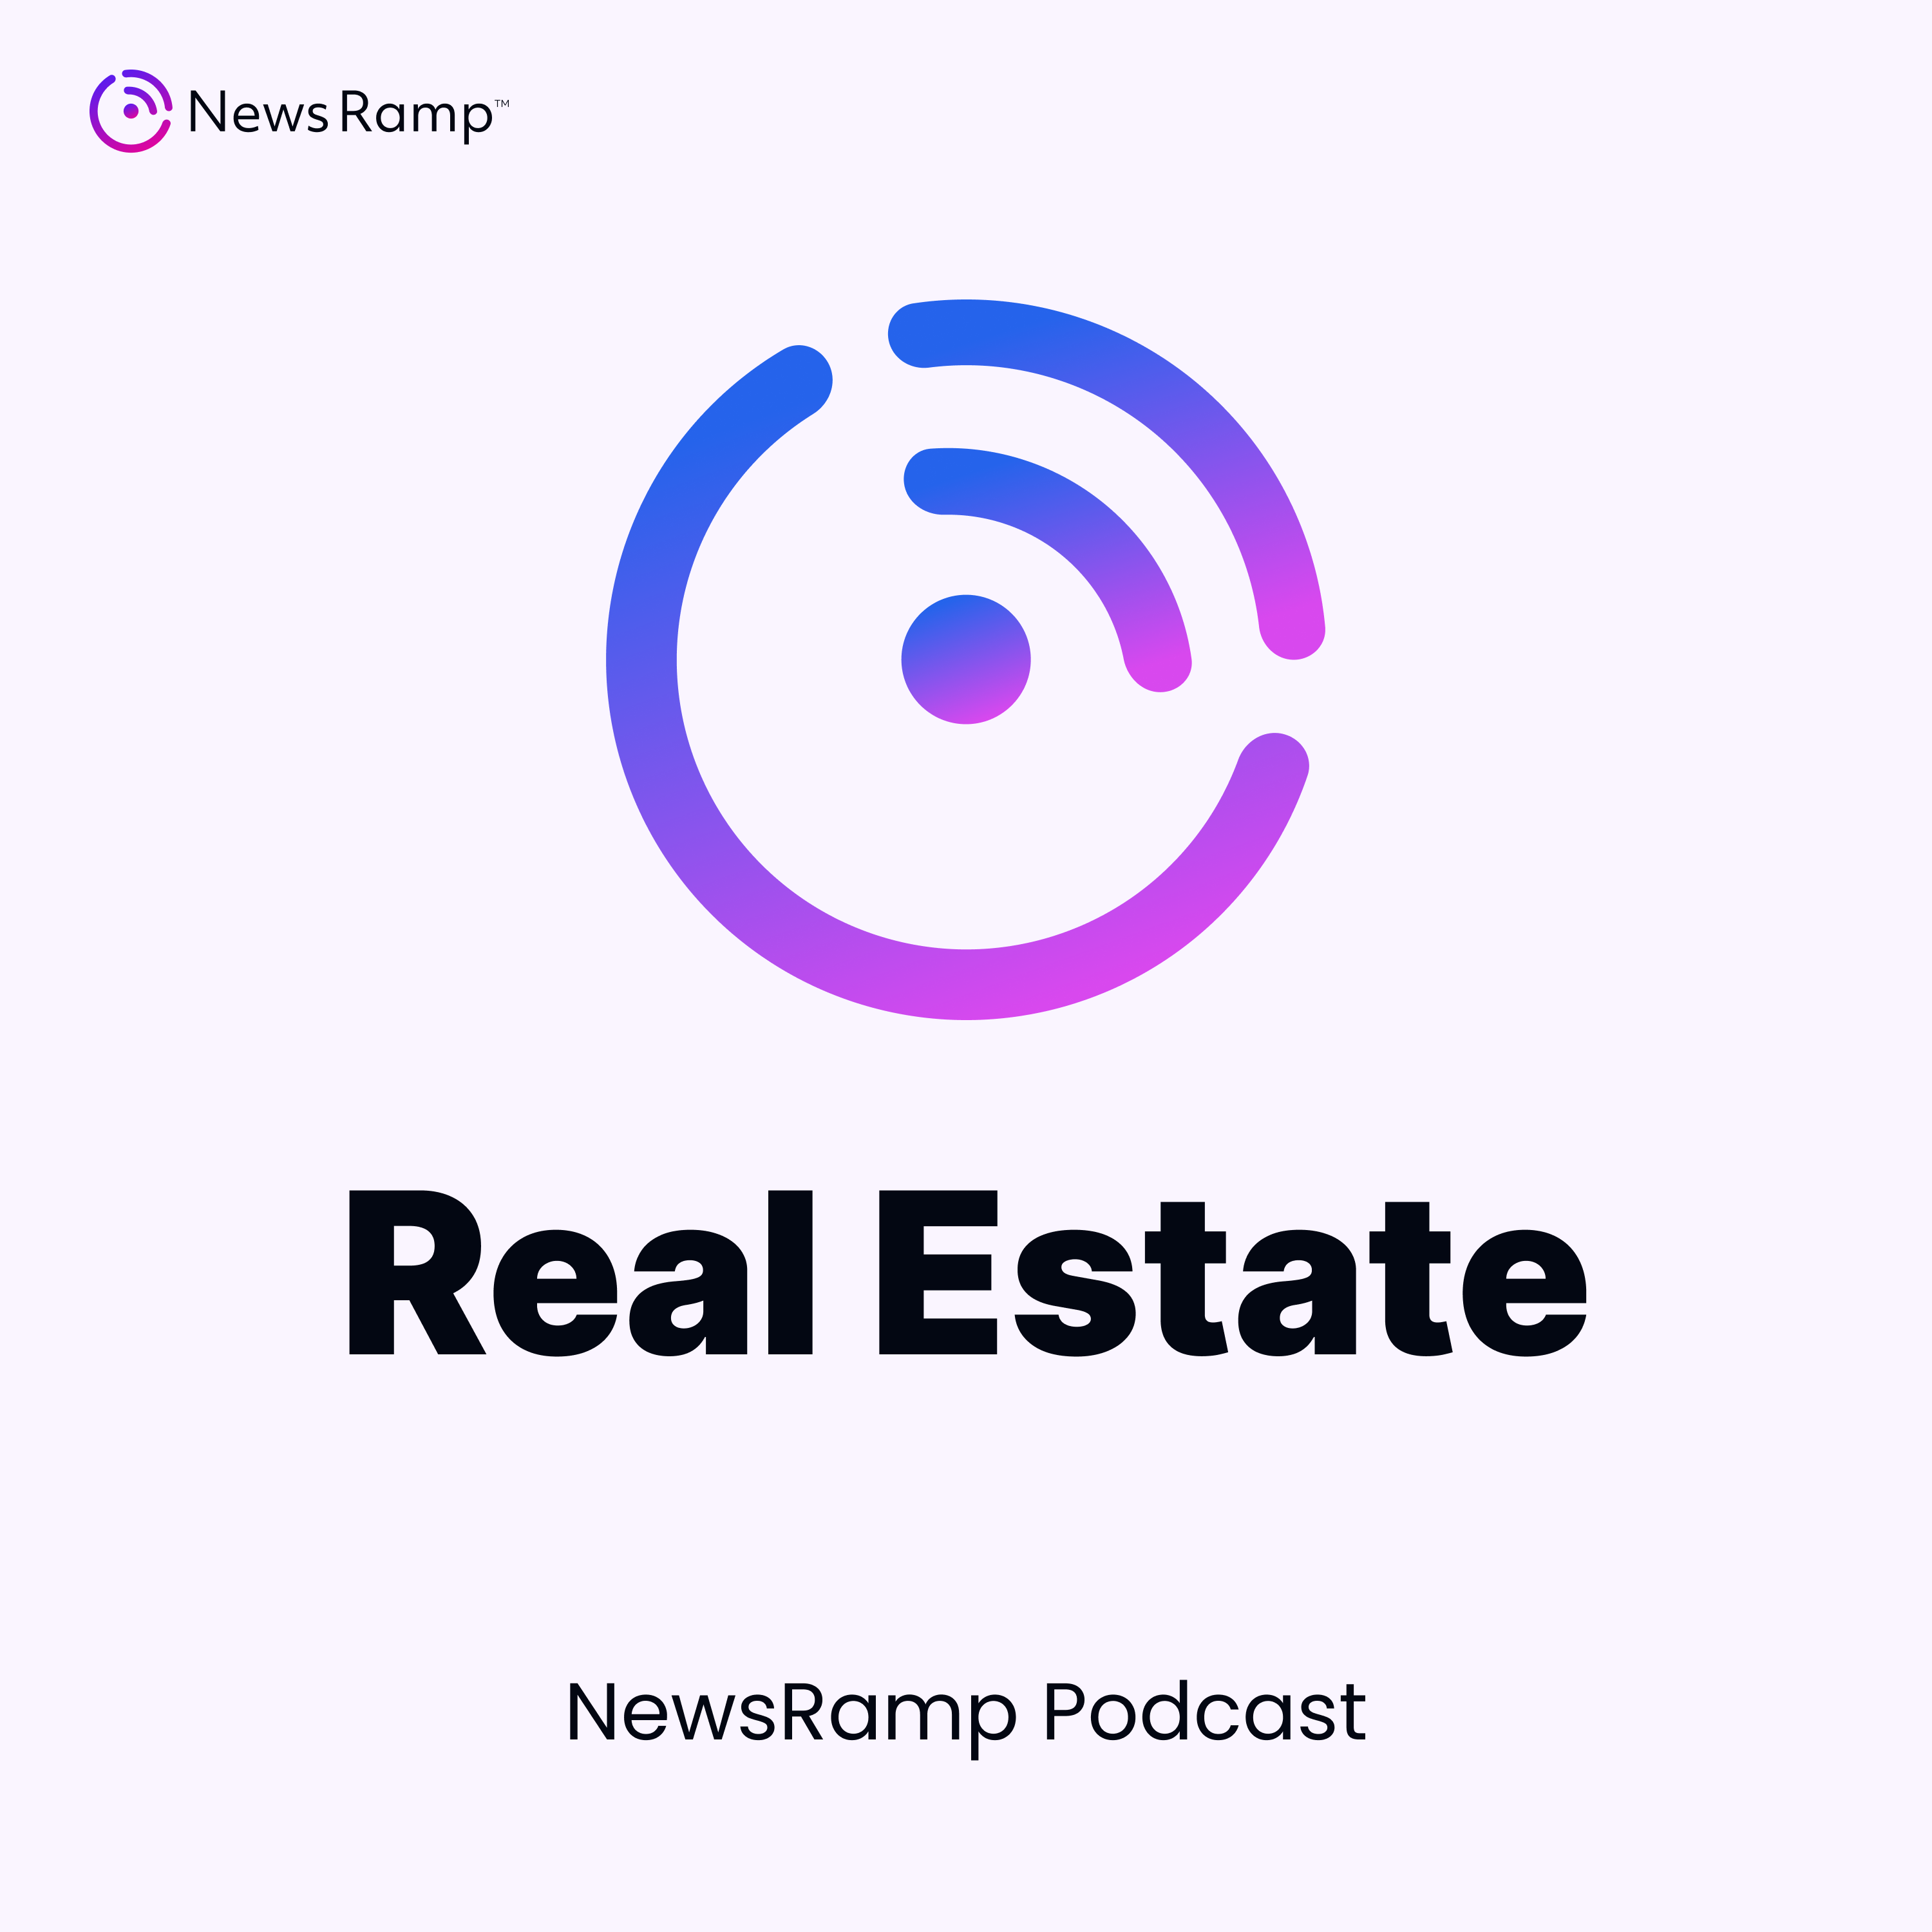 NewsRamp Real Estate Podcast